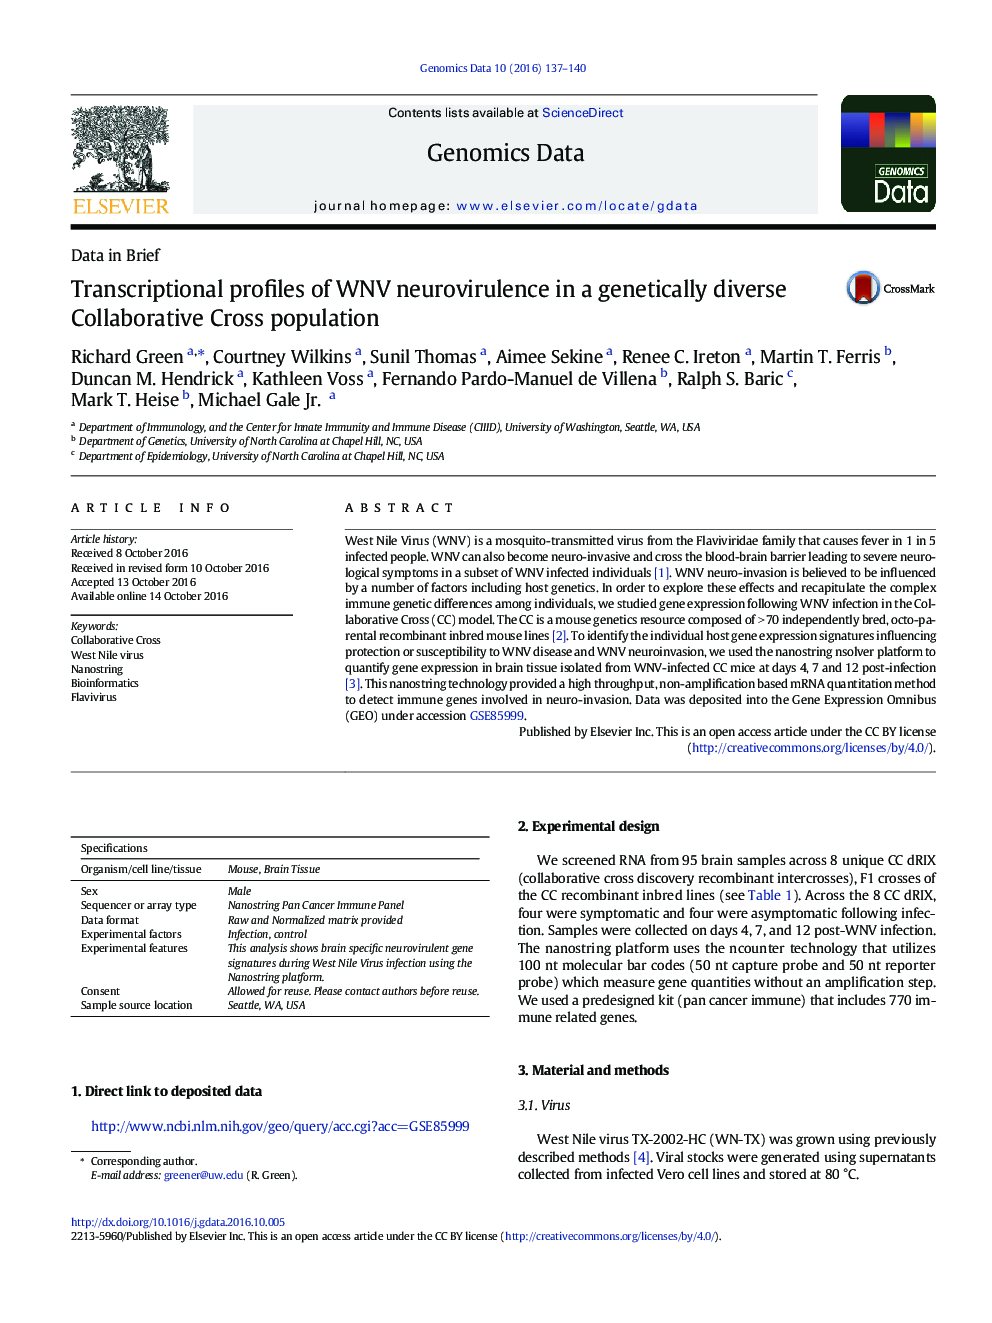 Transcriptional profiles of WNV neurovirulence in a genetically diverse Collaborative Cross population